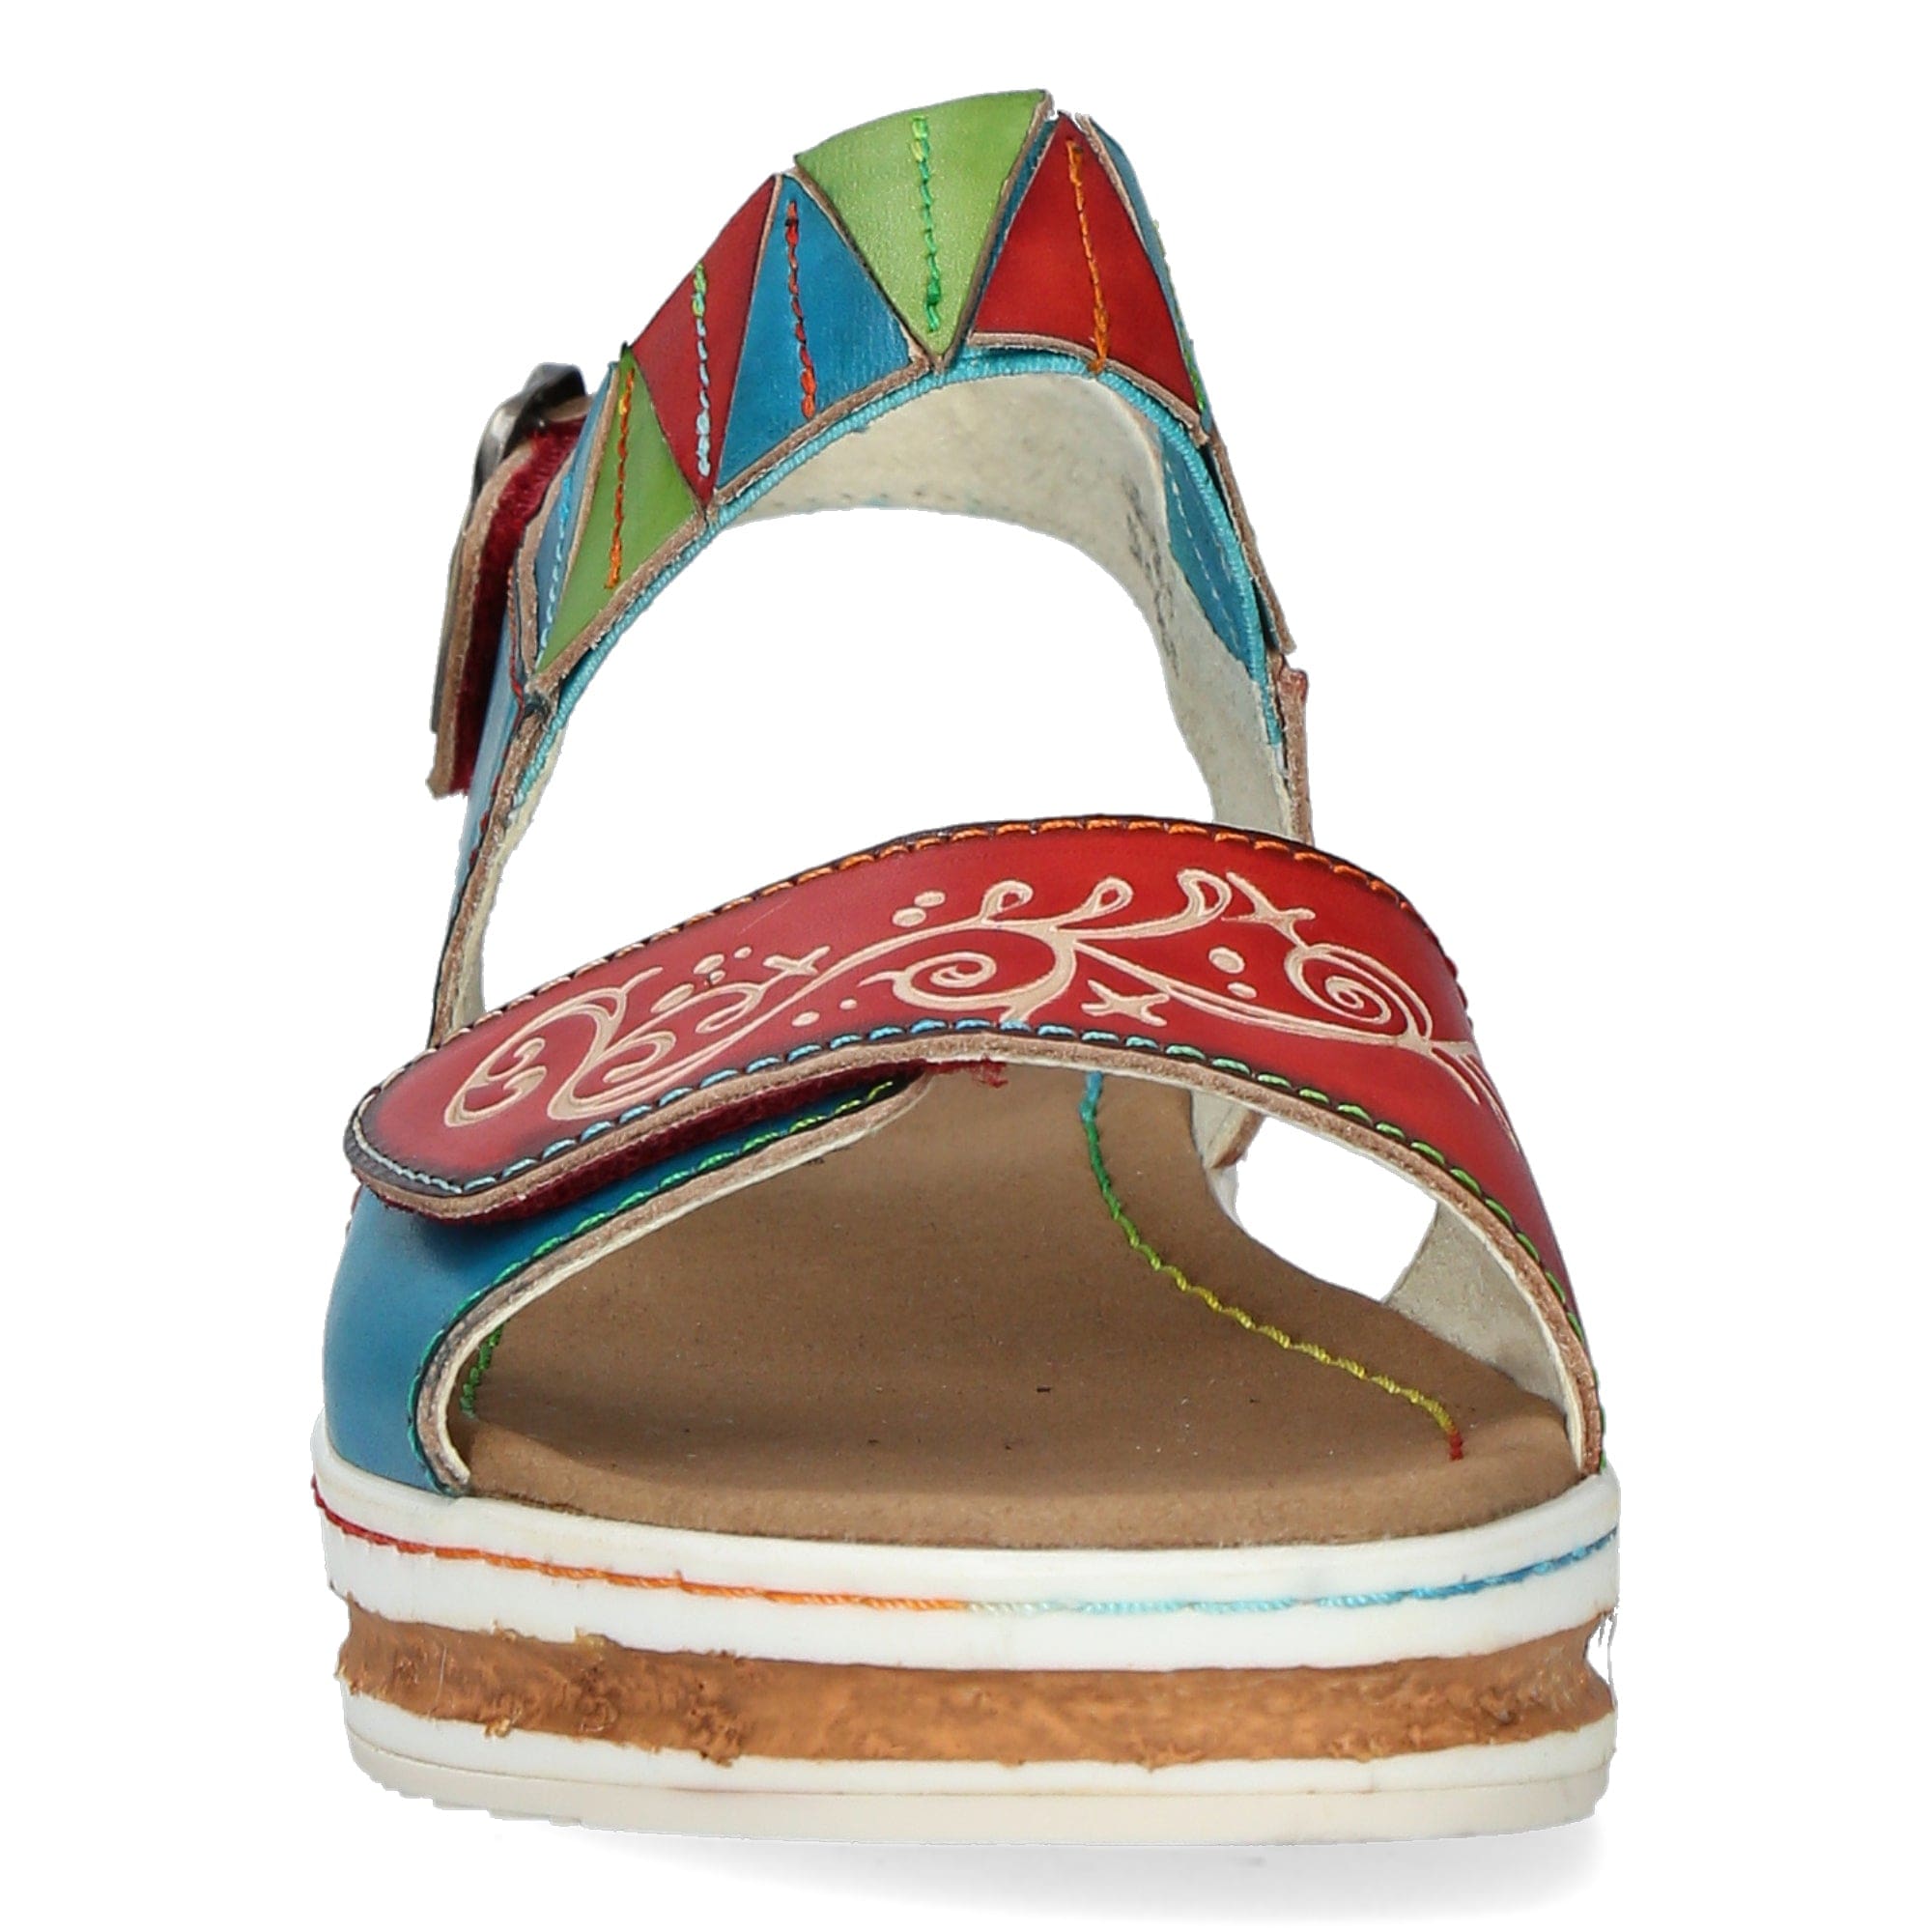 Shoe DICEZEO 05 - Sandal